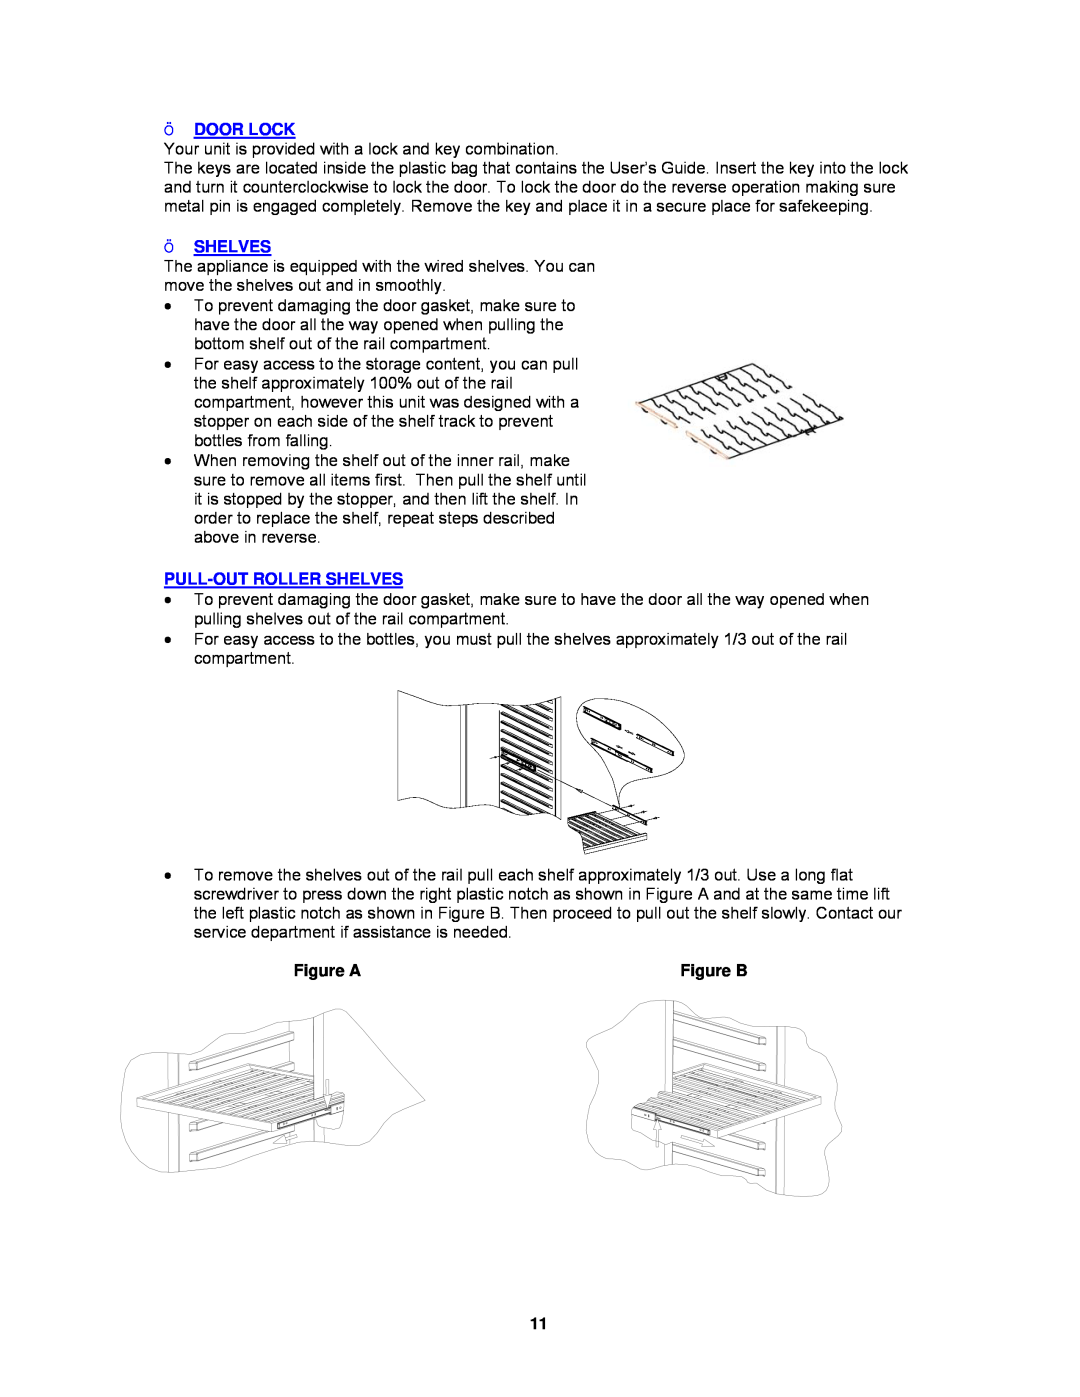 Avanti WCR4600S instruction manual ¬ Door Lock, ¬ Shelves, Pull-Out Roller Shelves, Figure A 